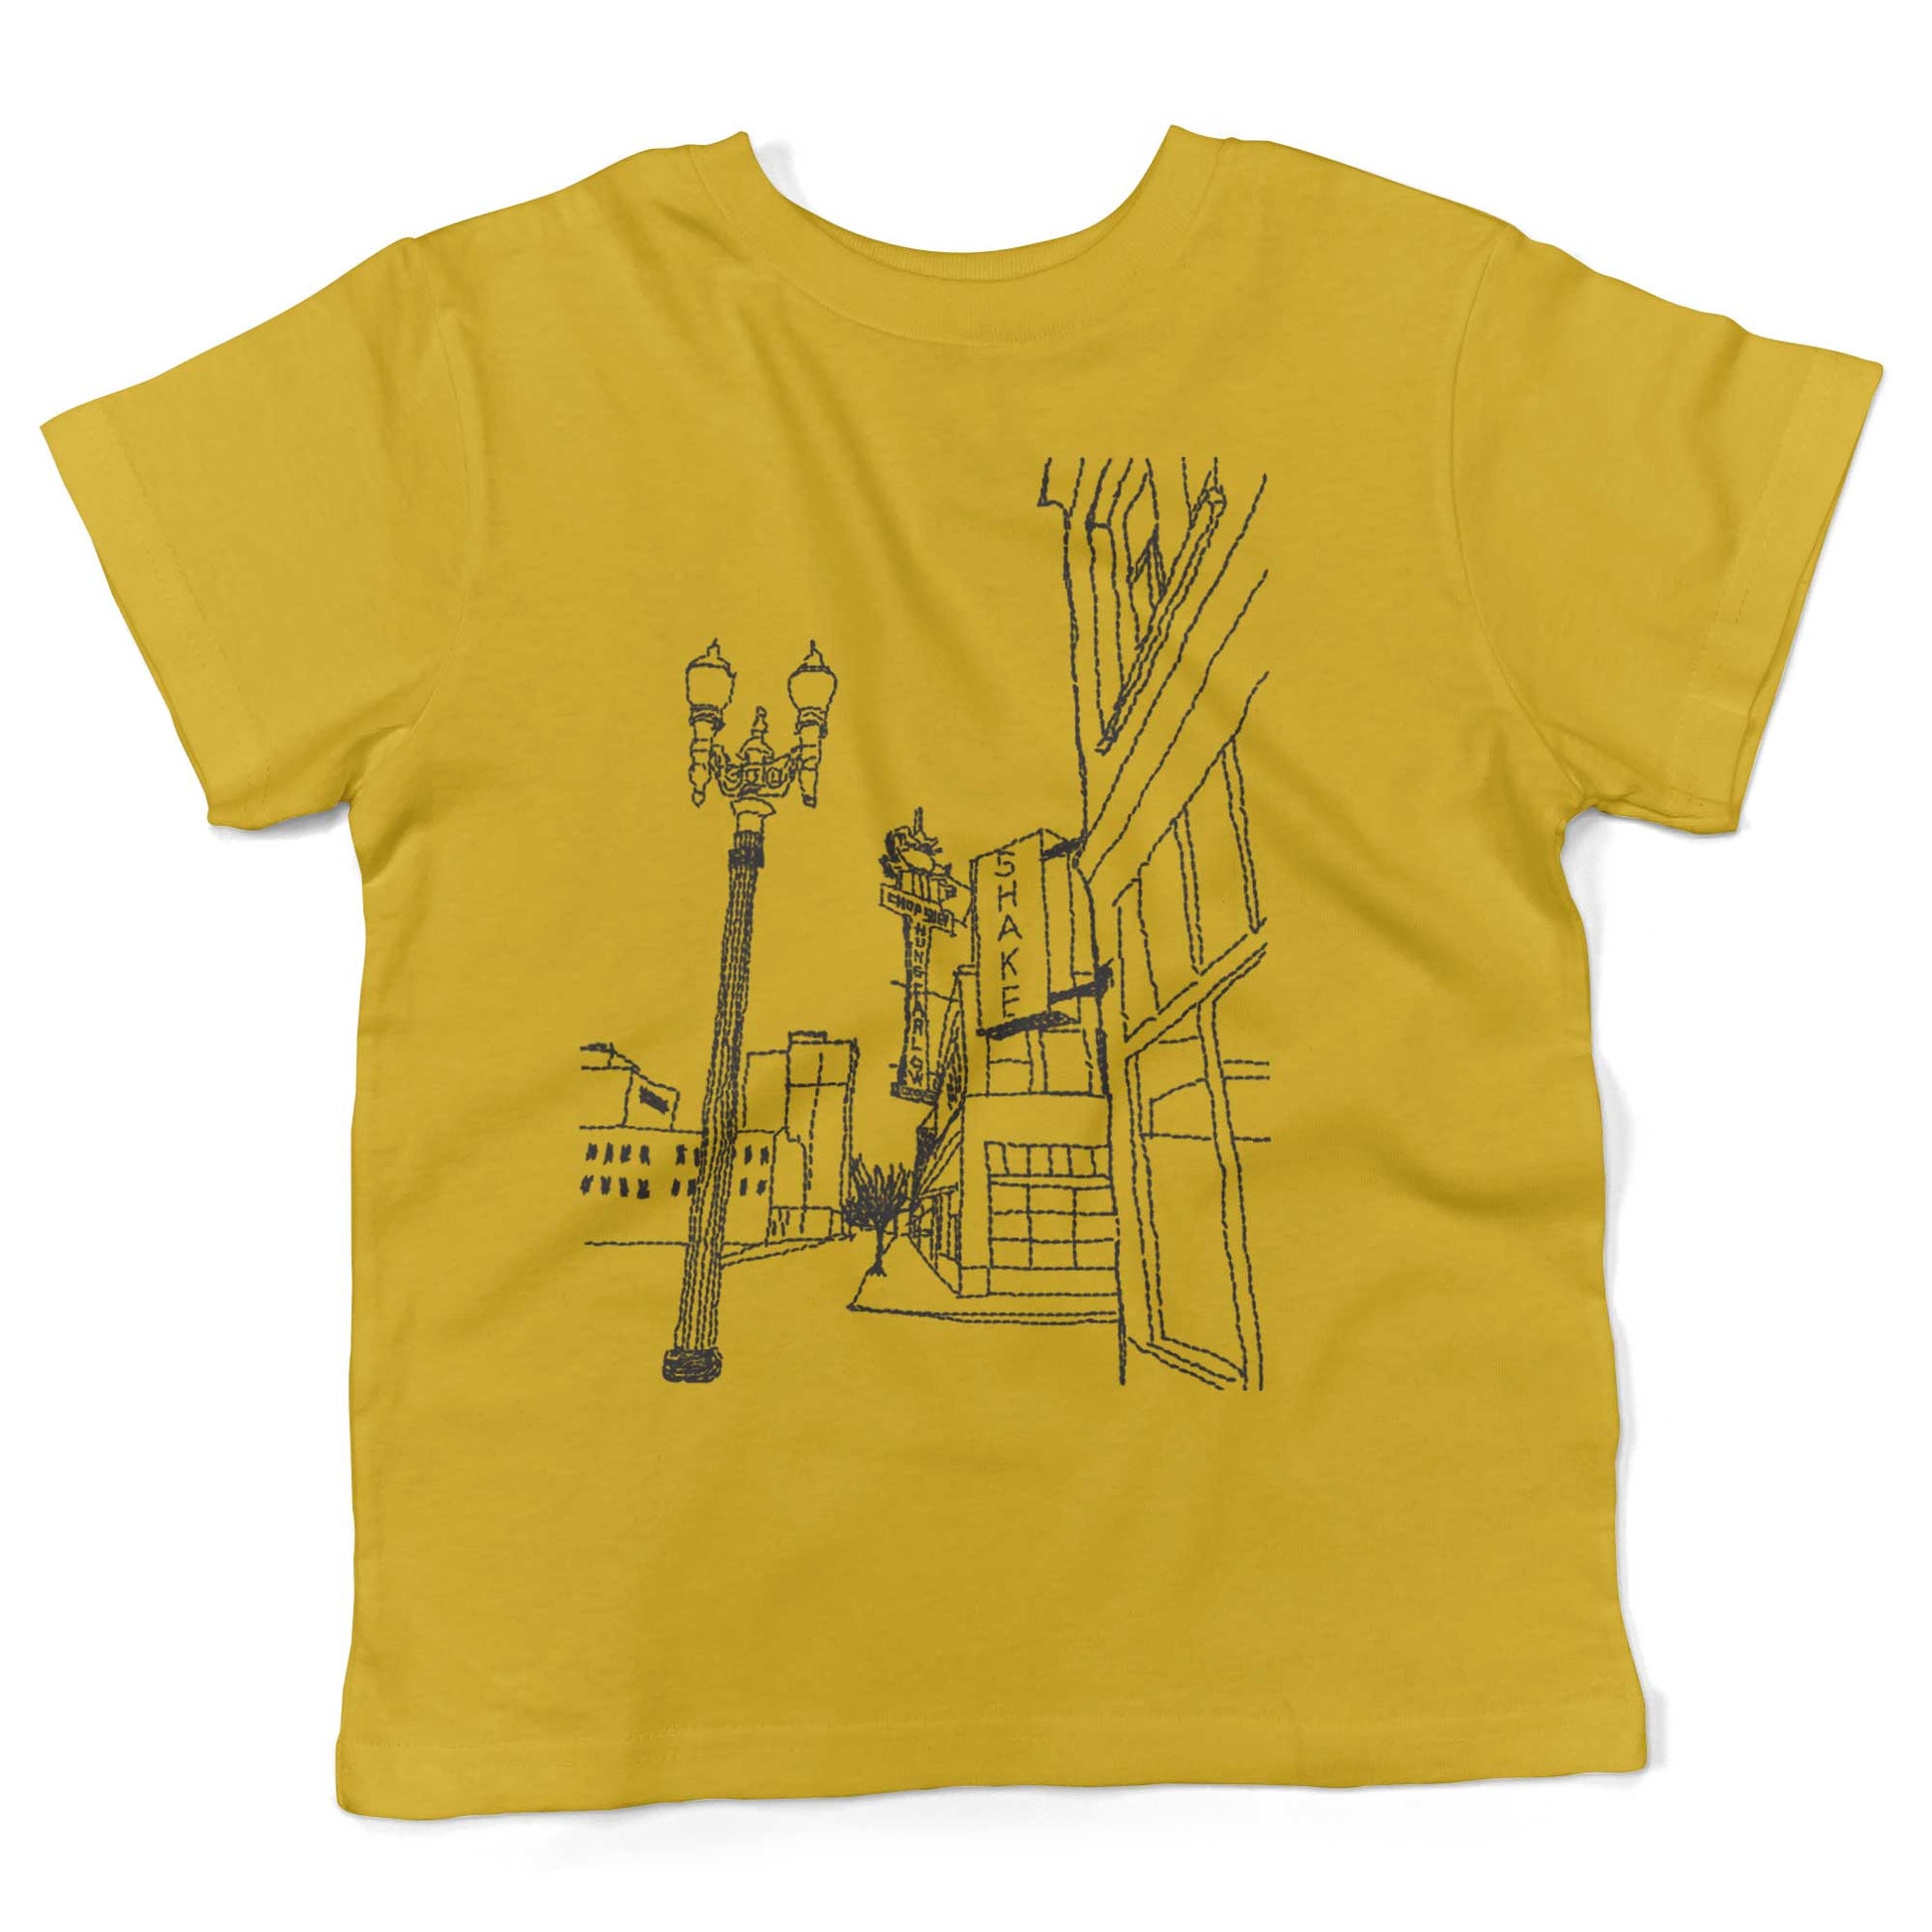 Chinatown Hung Far Low Restaurant Toddler Shirt-Sunshine Yellow-2T